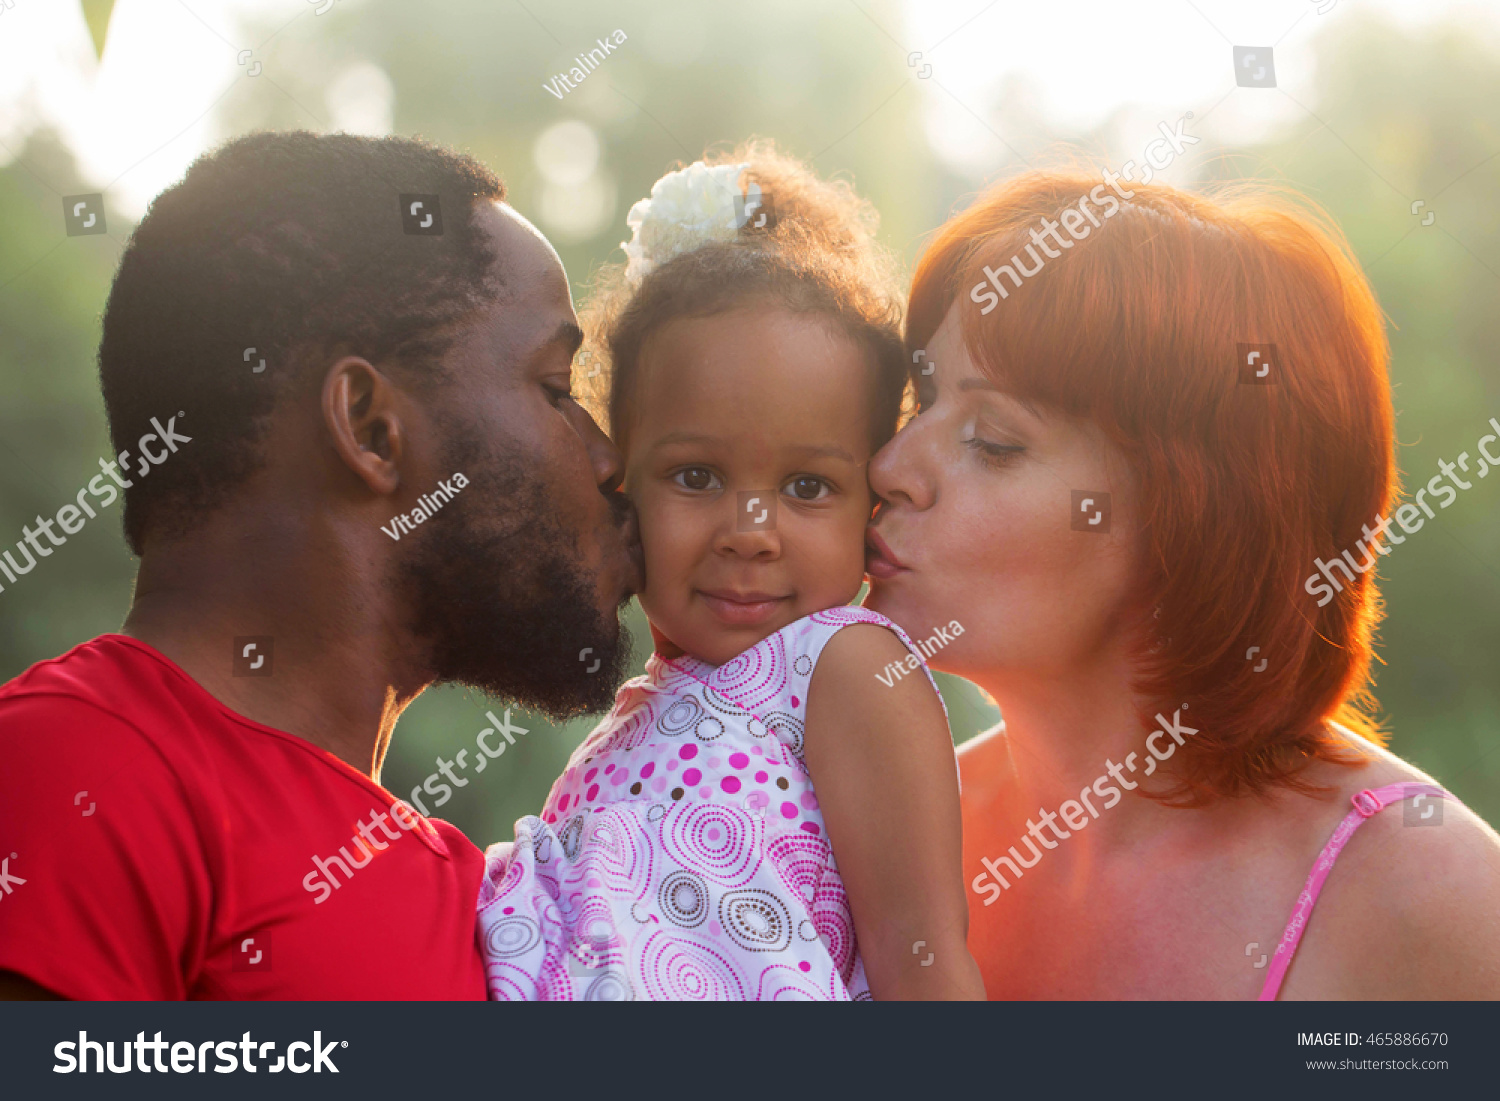 White family has black baby